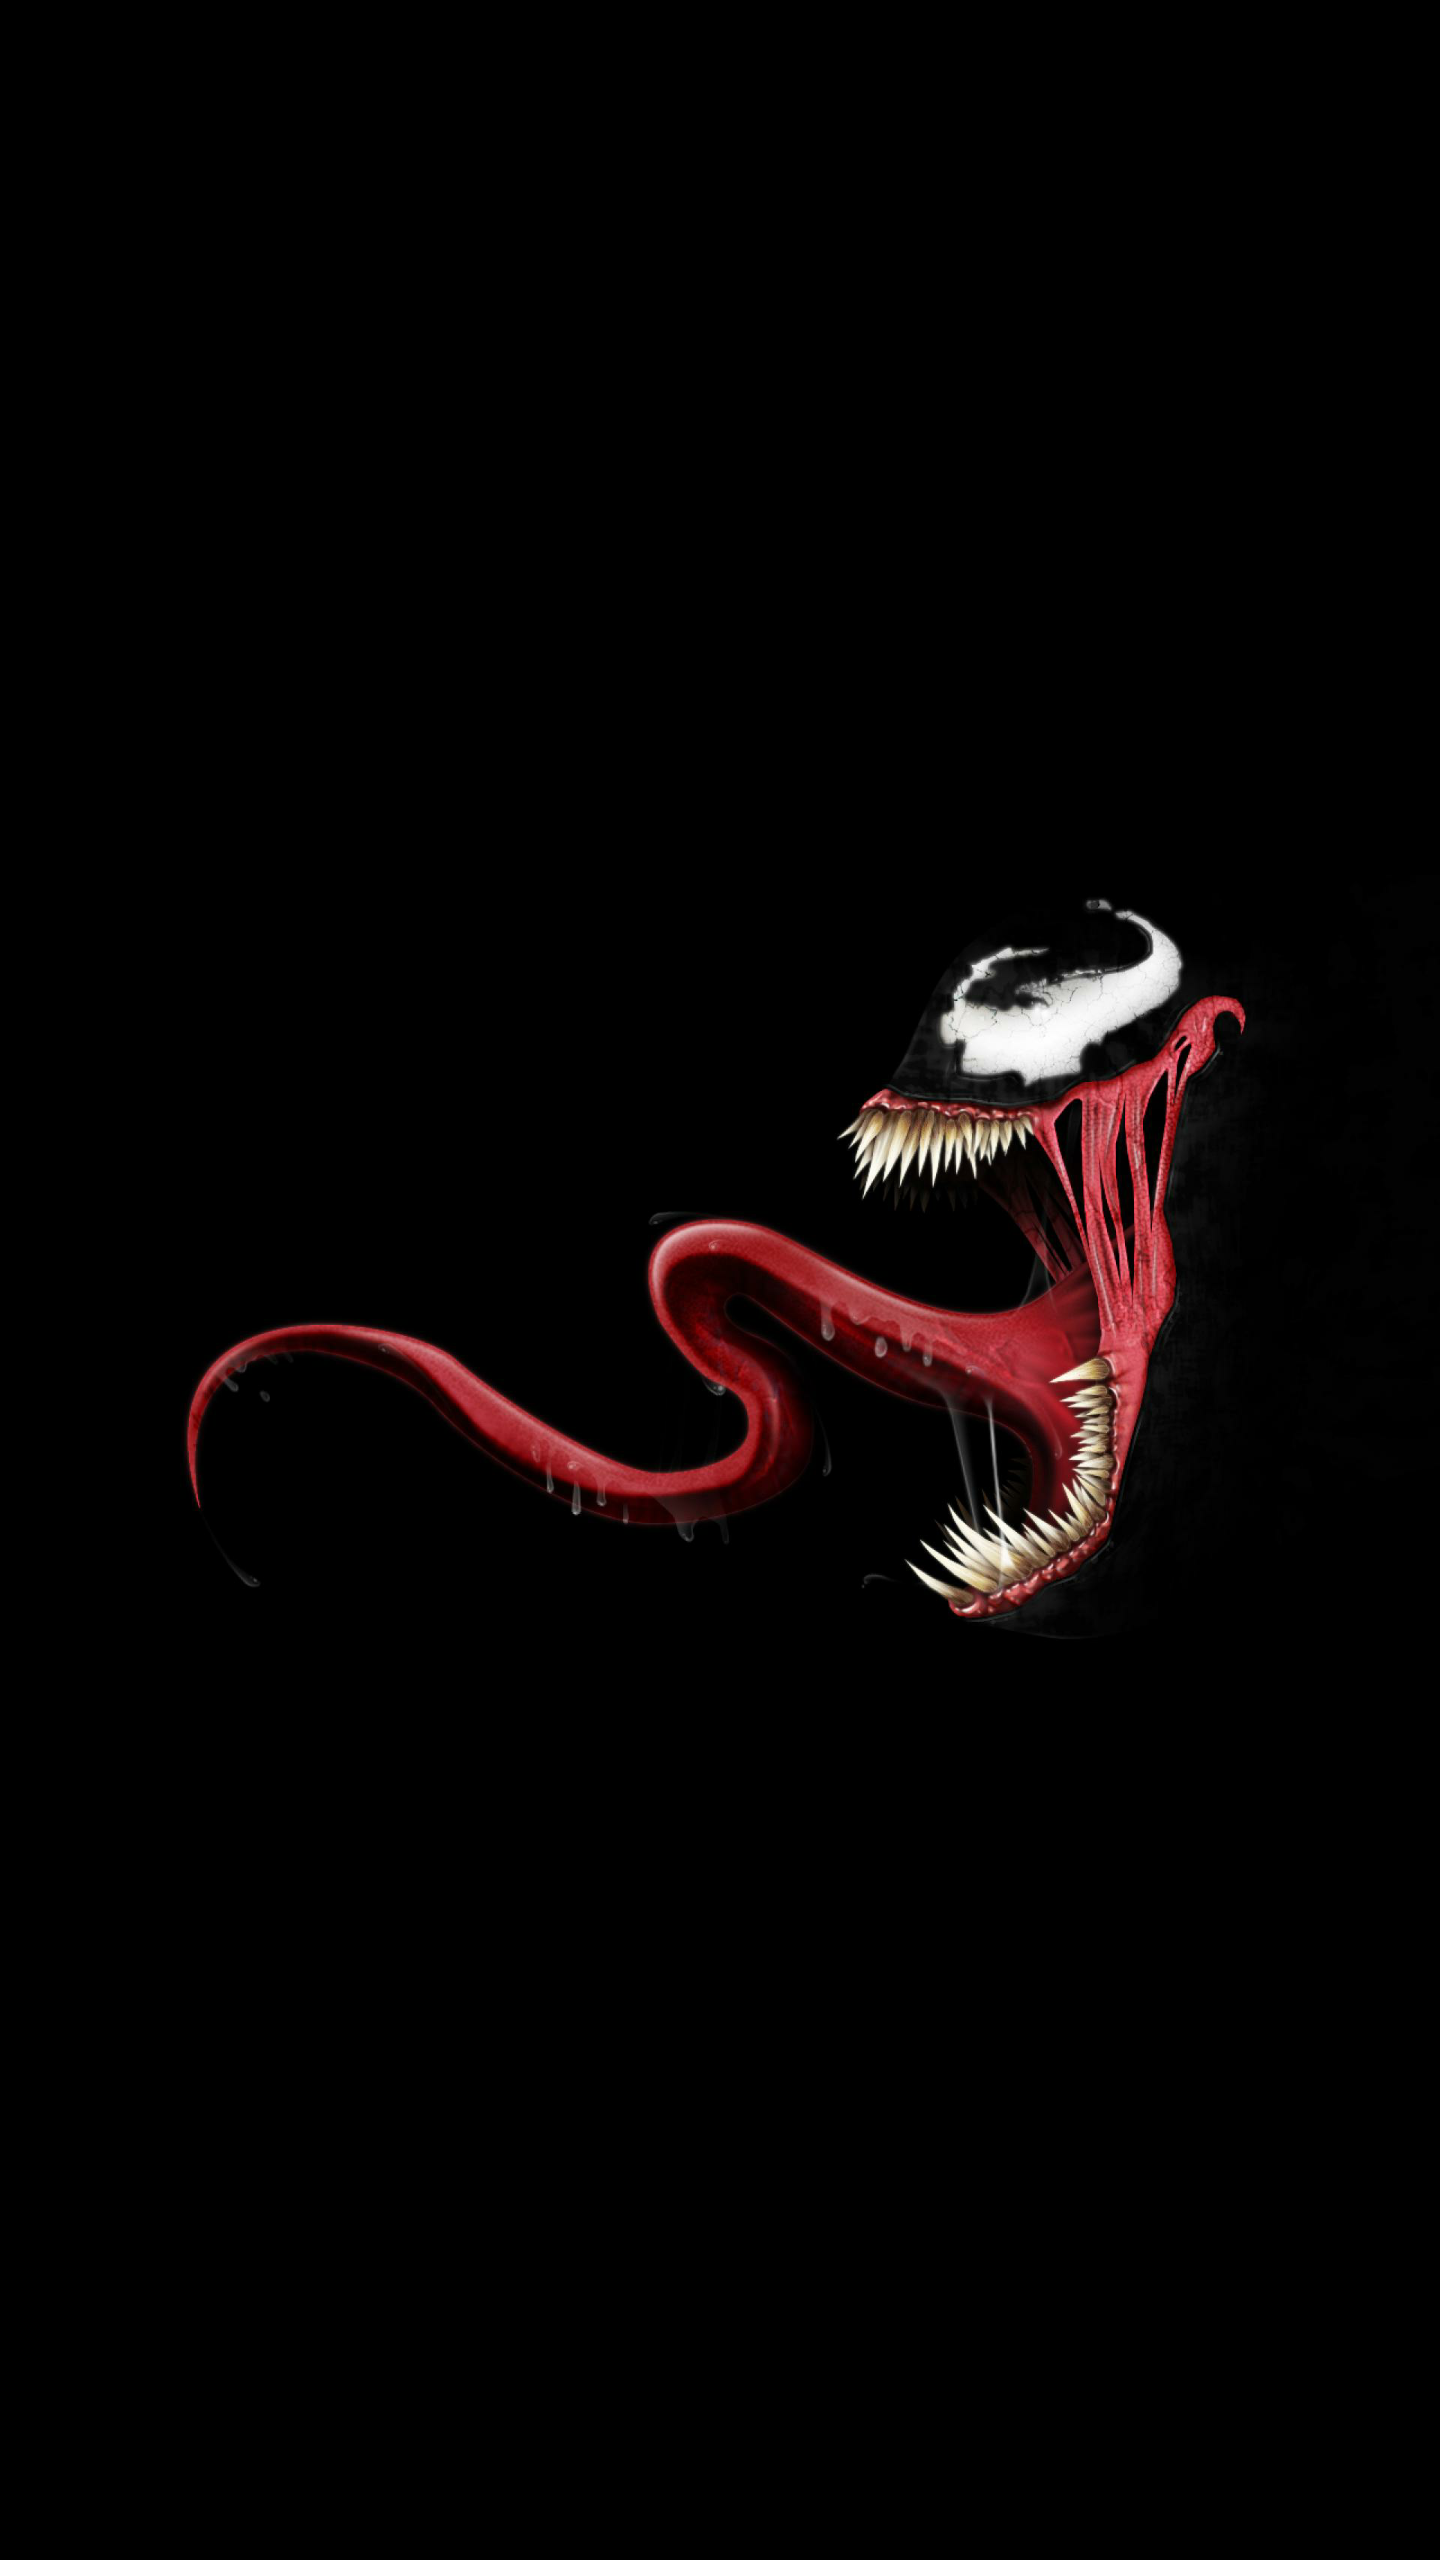 Venom [1440x2560] rAmoledbackgrounds 1440x2560